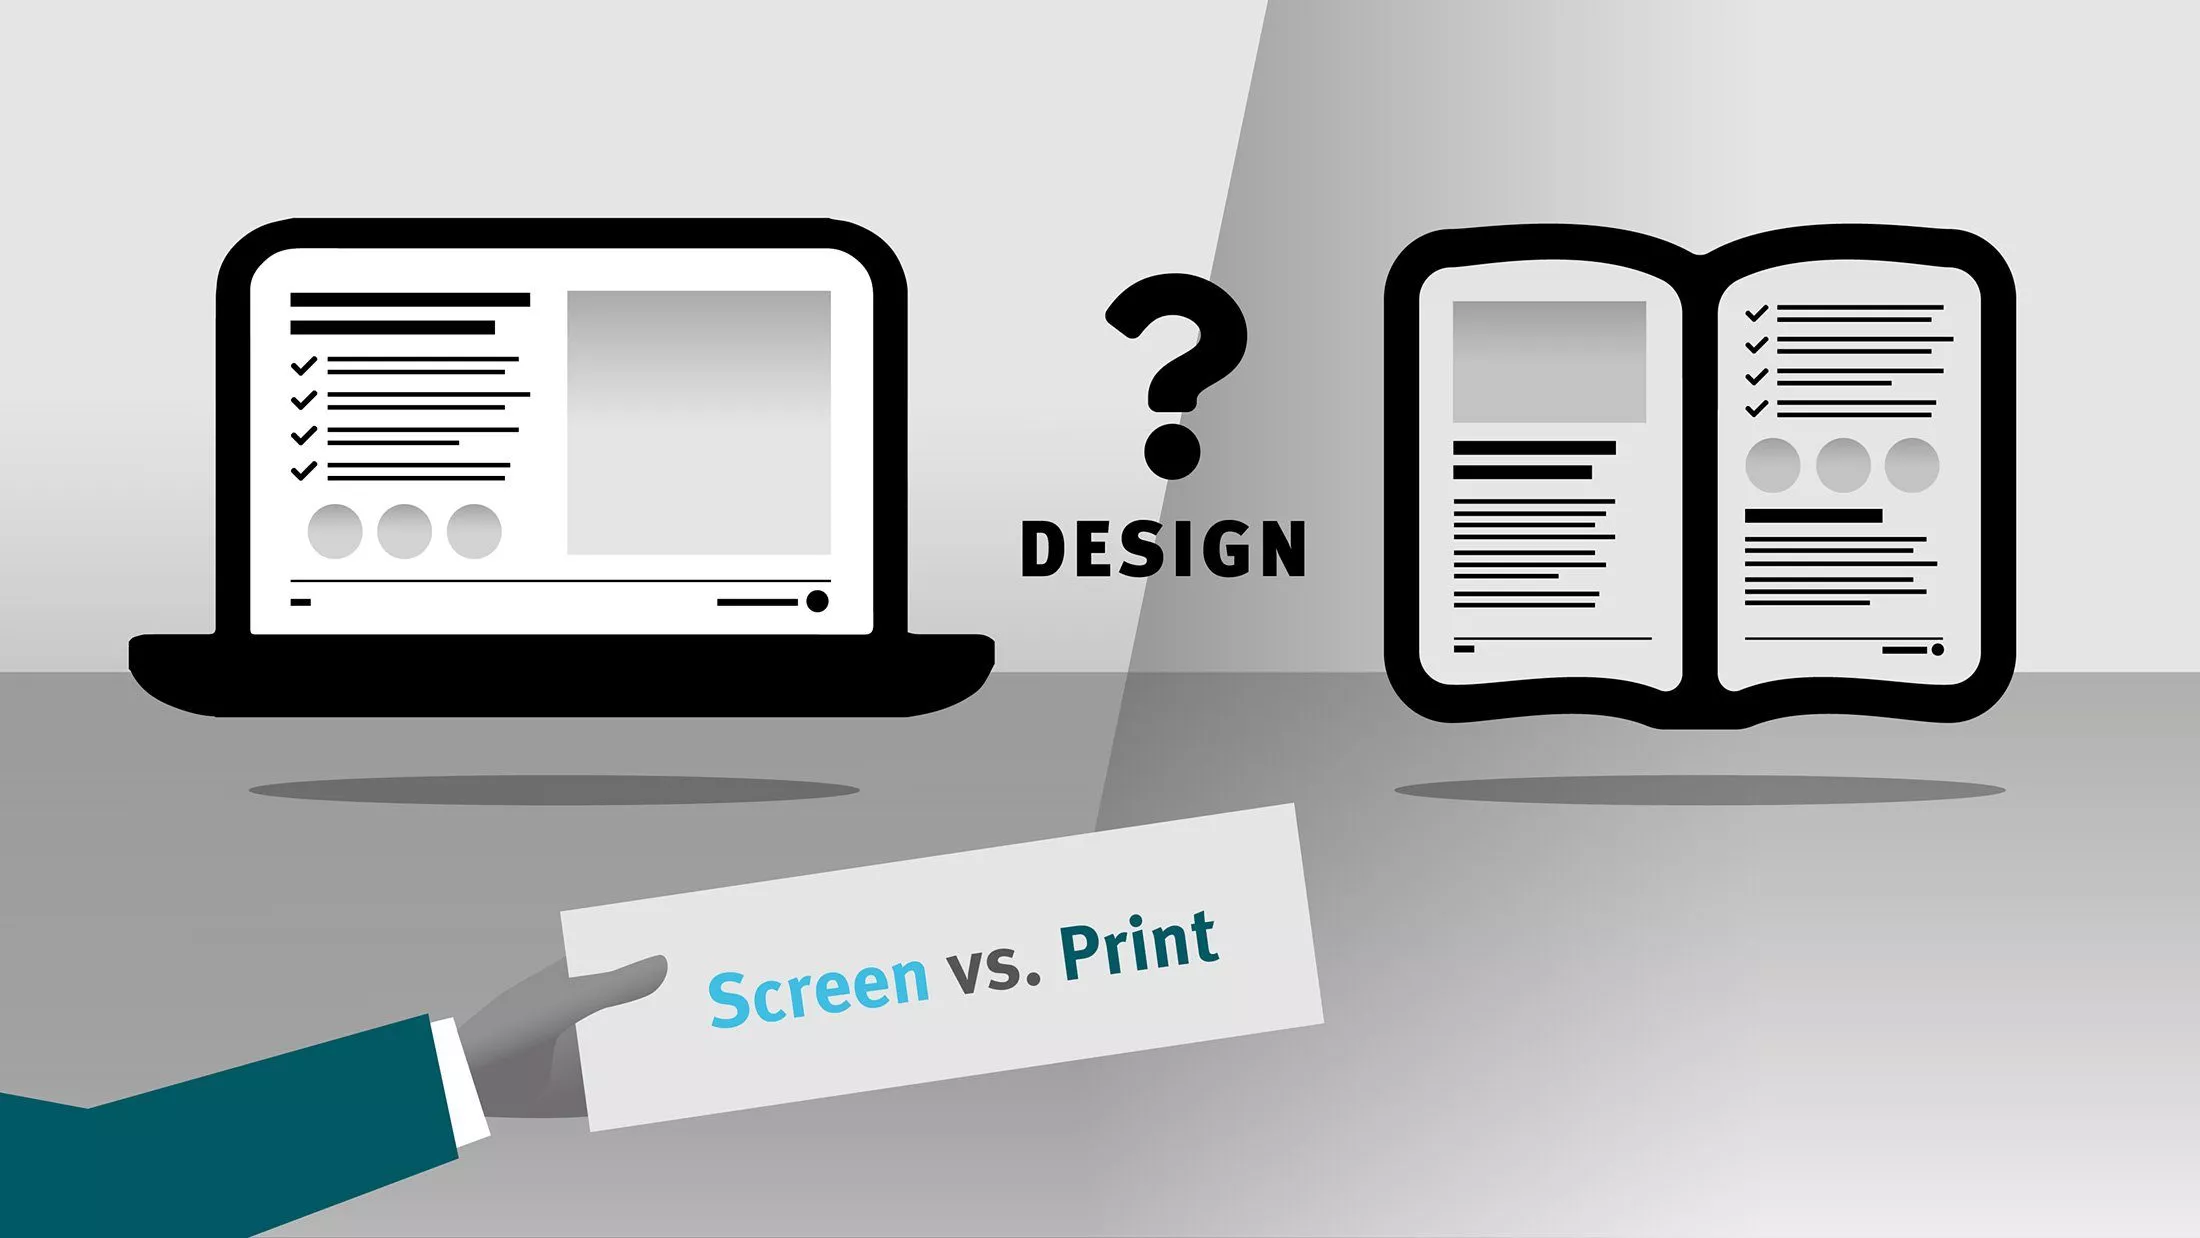 Screen vs. Print Design